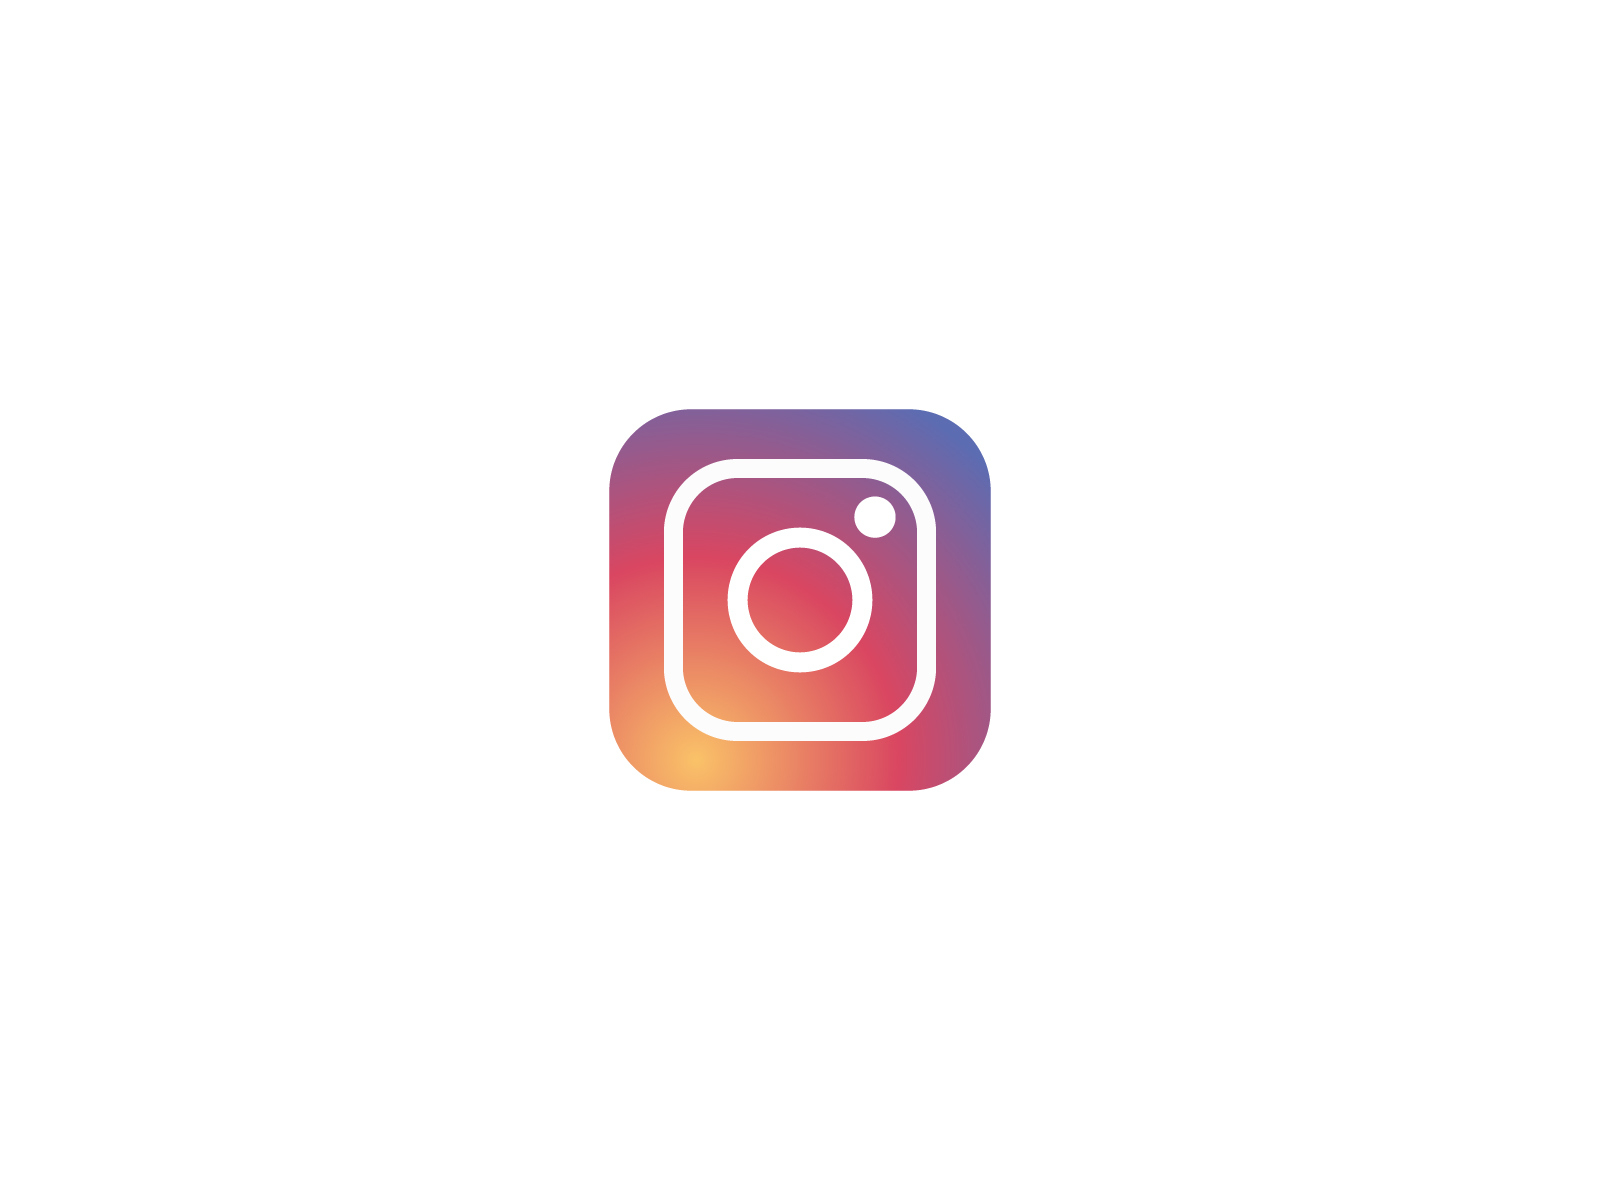 Redrawing Instagram Logo by Shaila Sultana on Dribbble